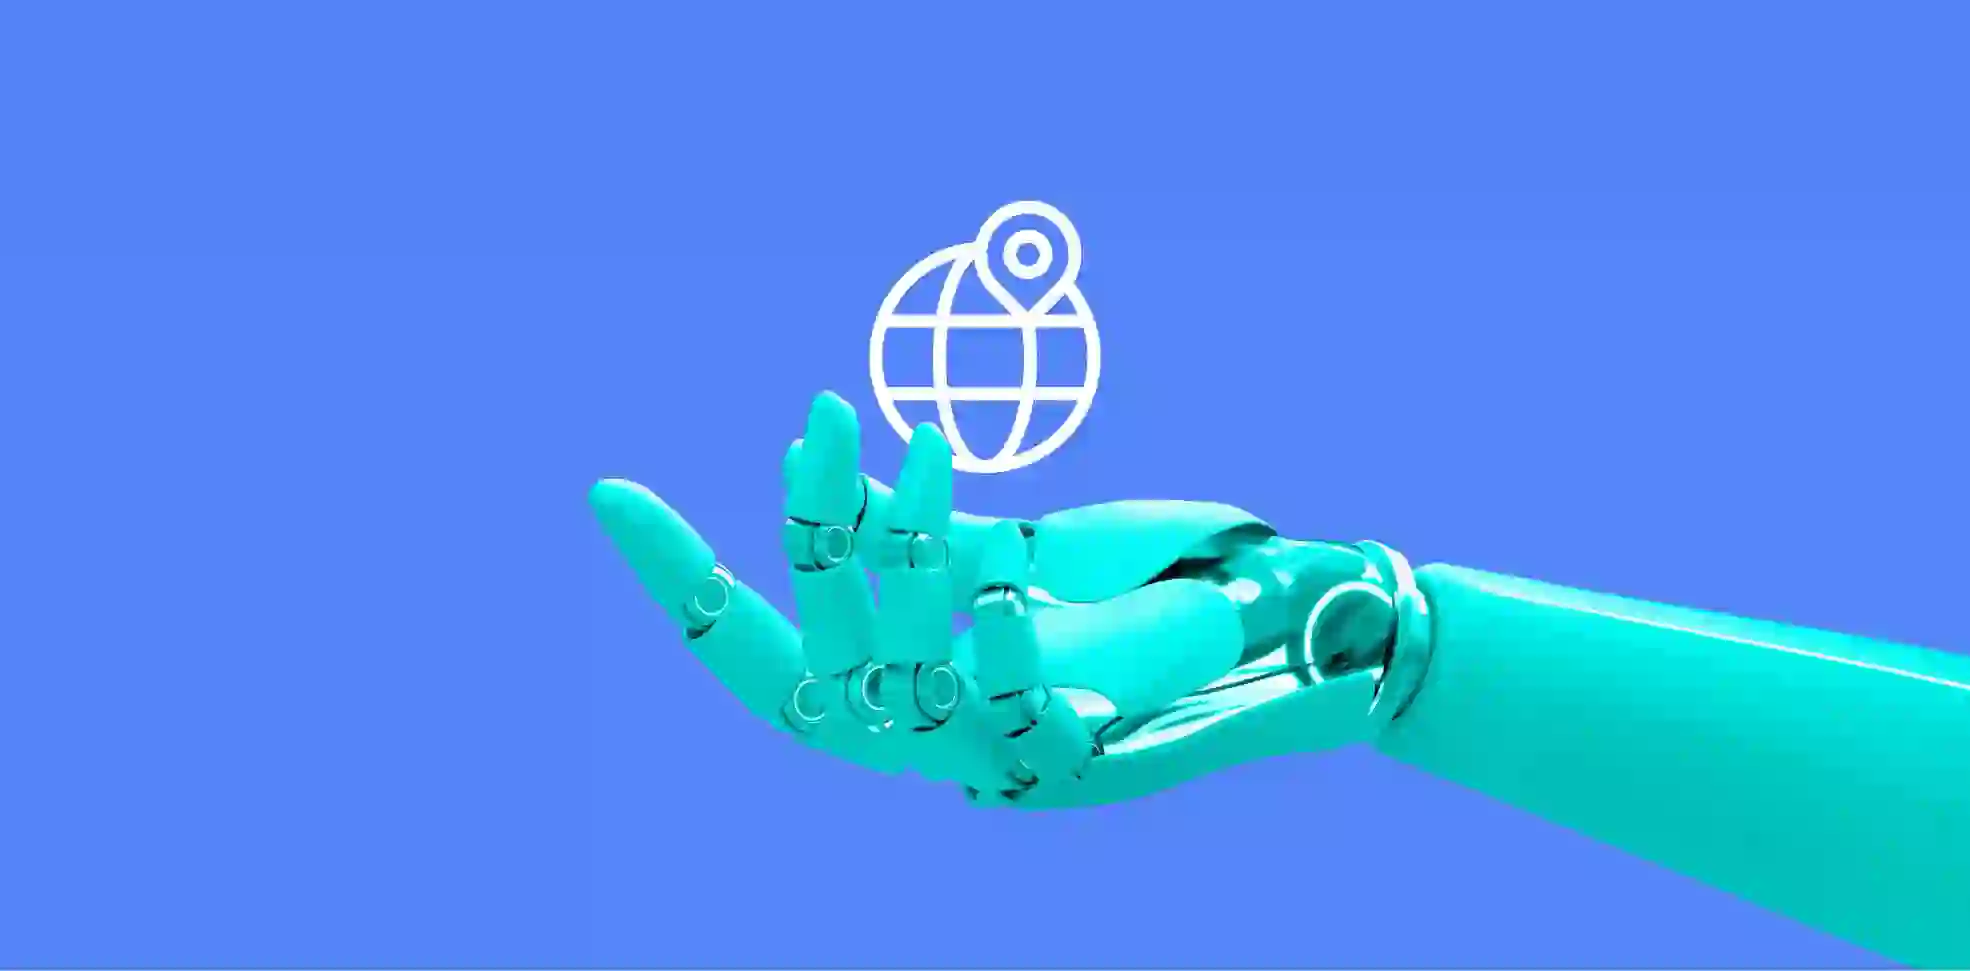 robot hand holding a globe symbol on blue background